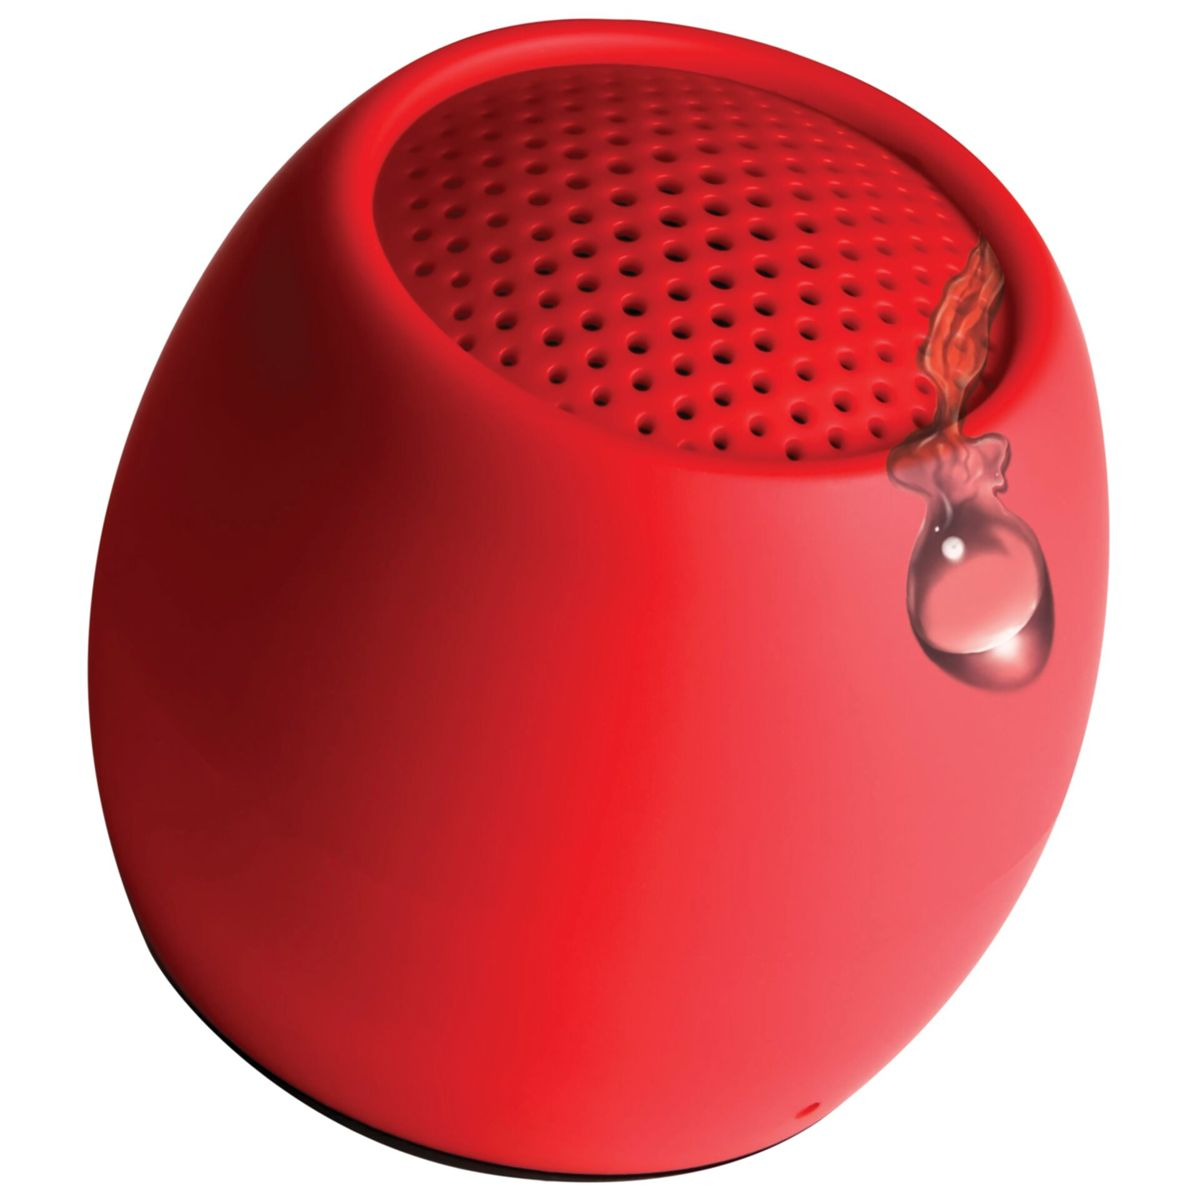 Bluetooth-Lautsprecher, BOOMPODS rot Zero Red